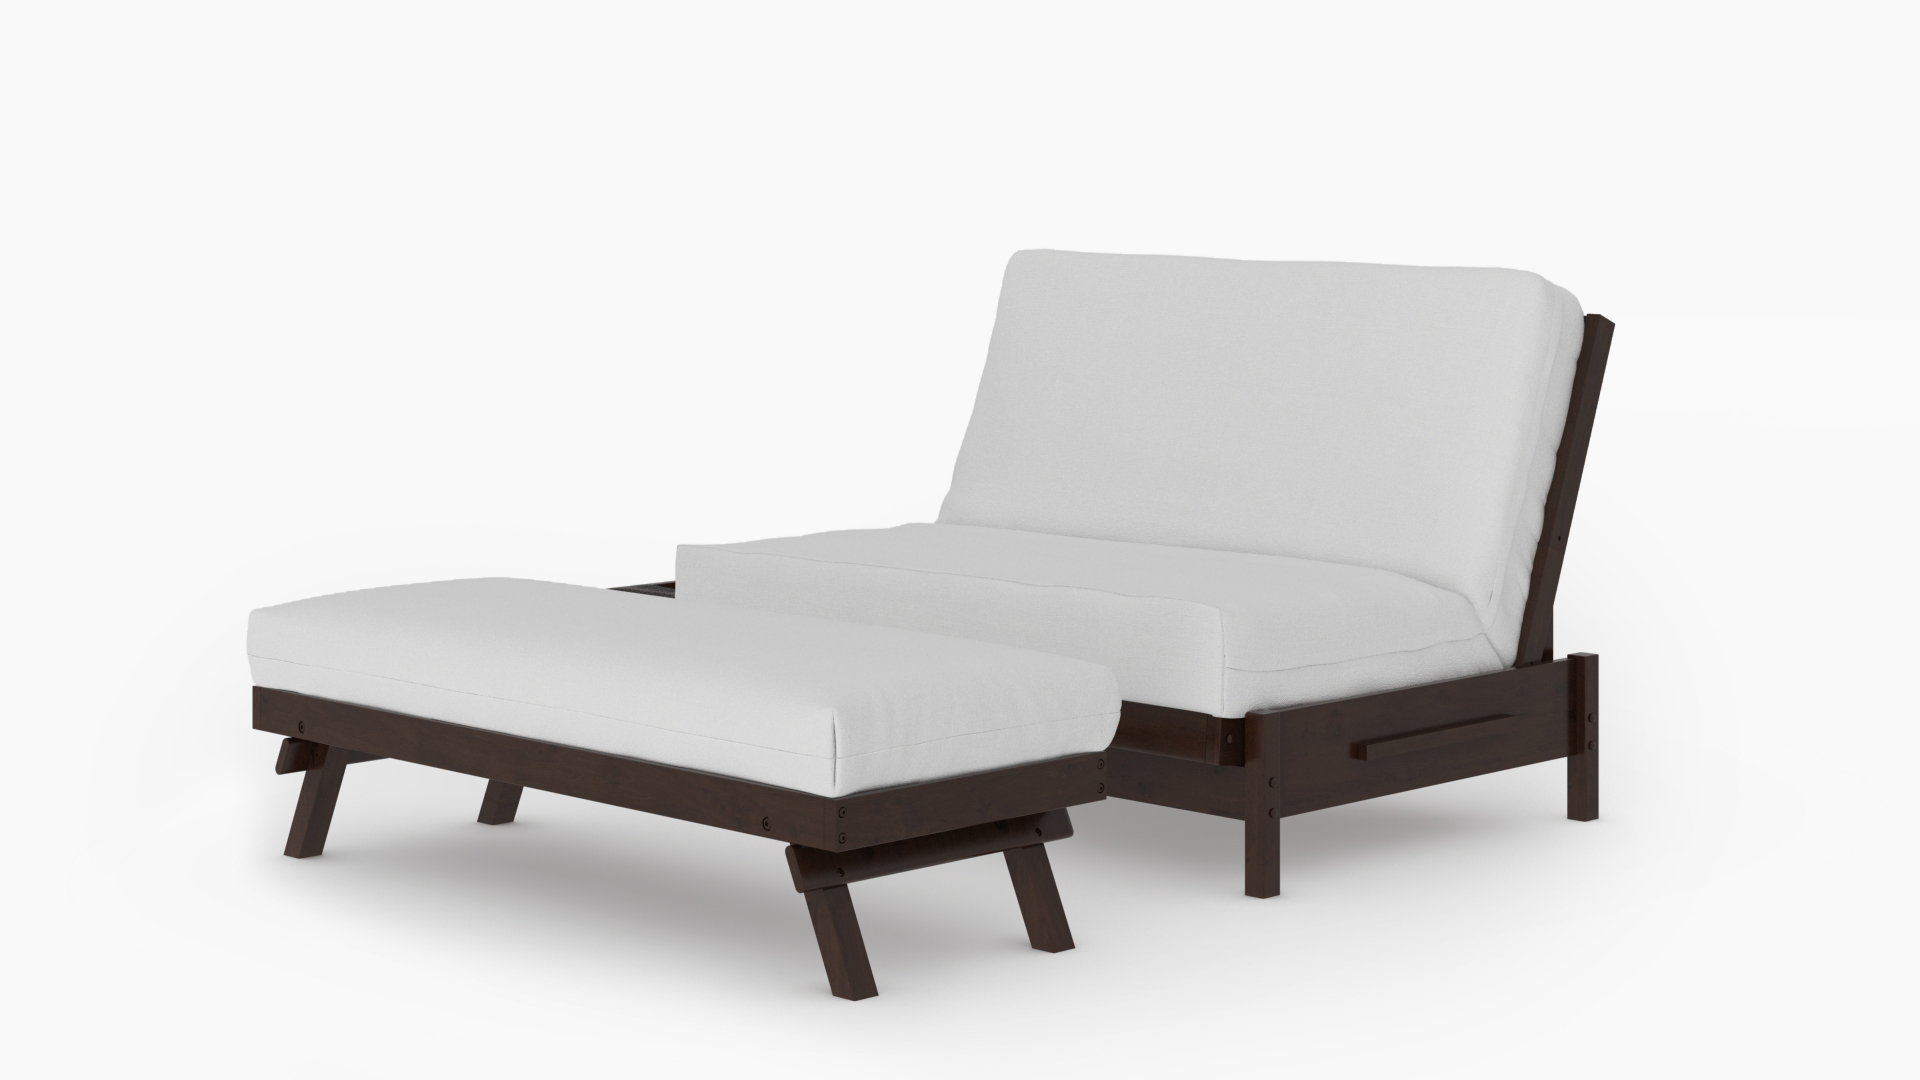 All wood futon loveseat and ottoman futon frame